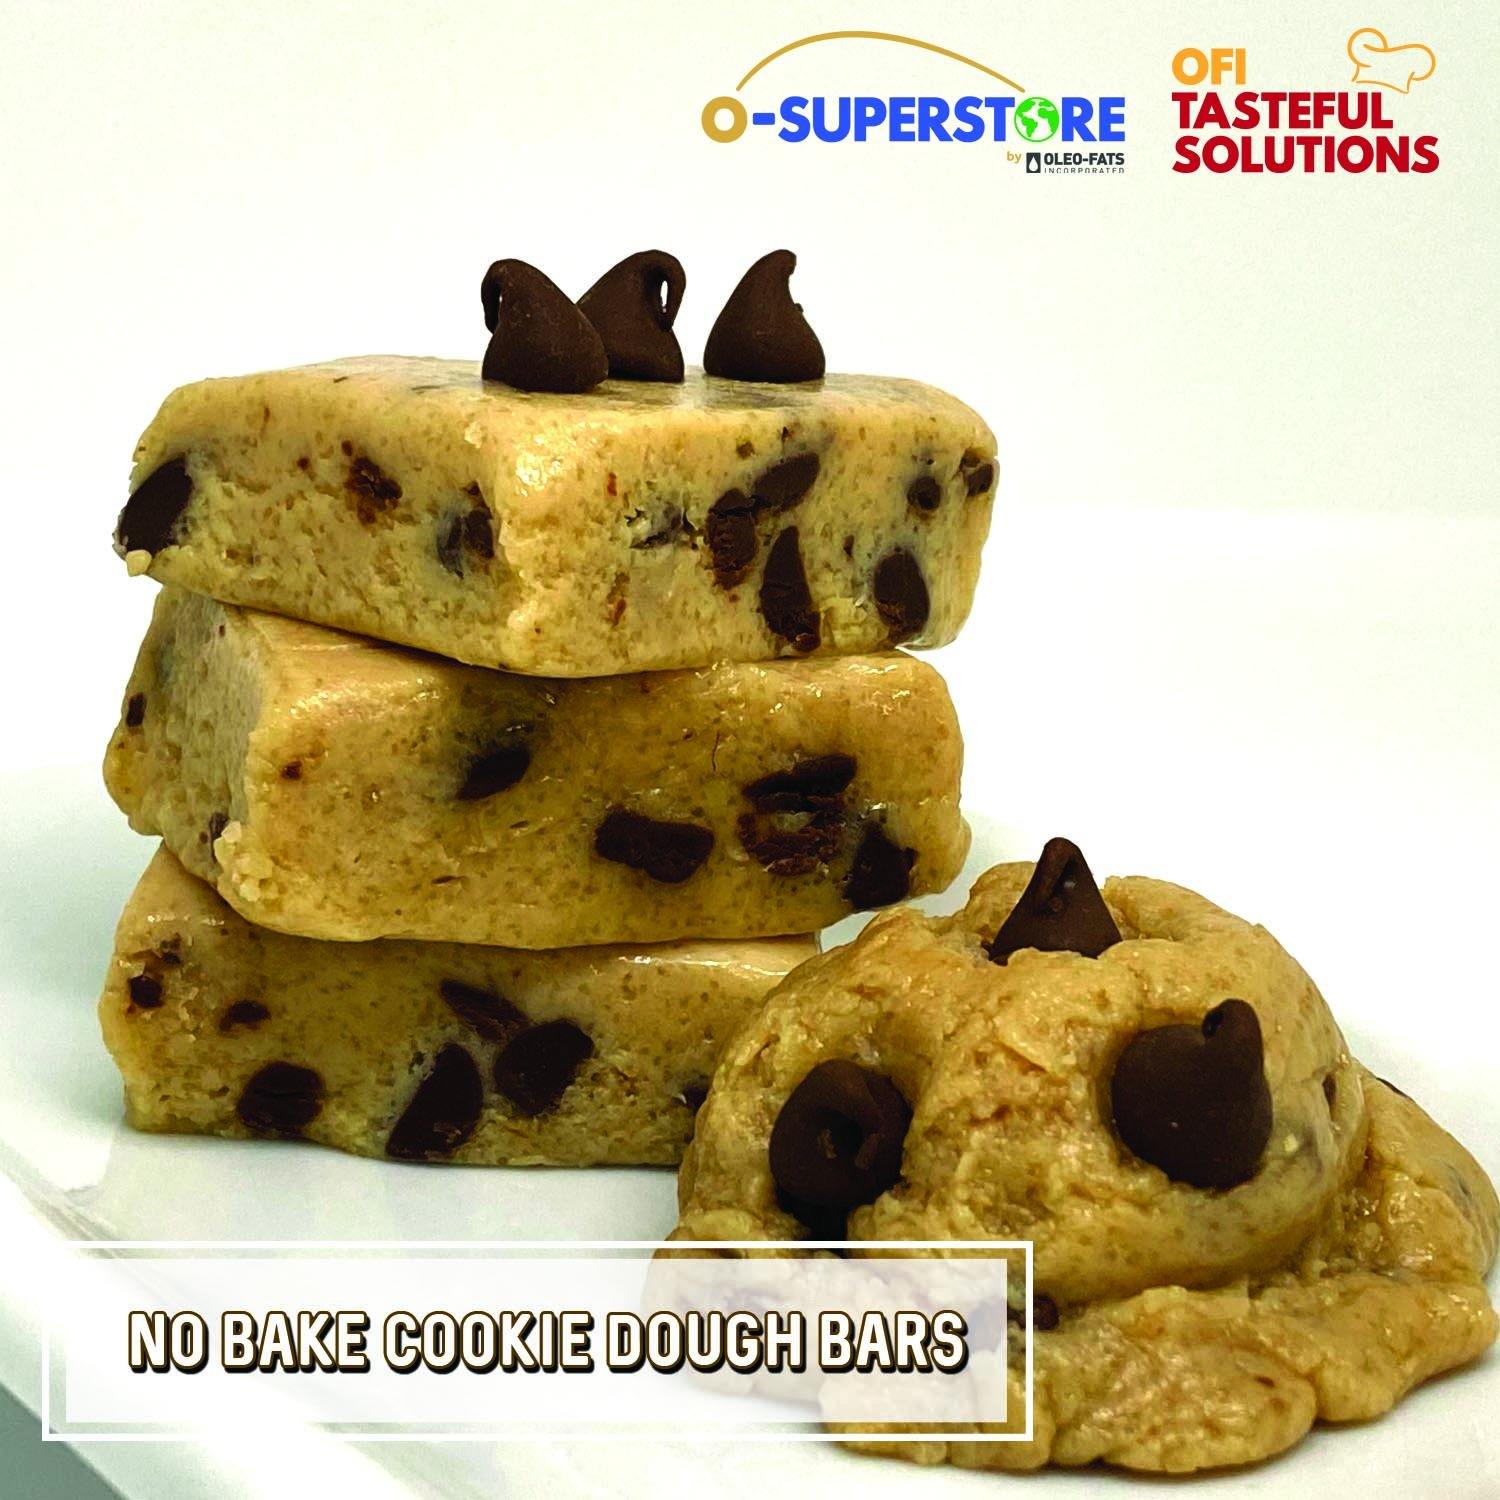 No Bake Cookie Dough Bars - O-SUPERSTORE